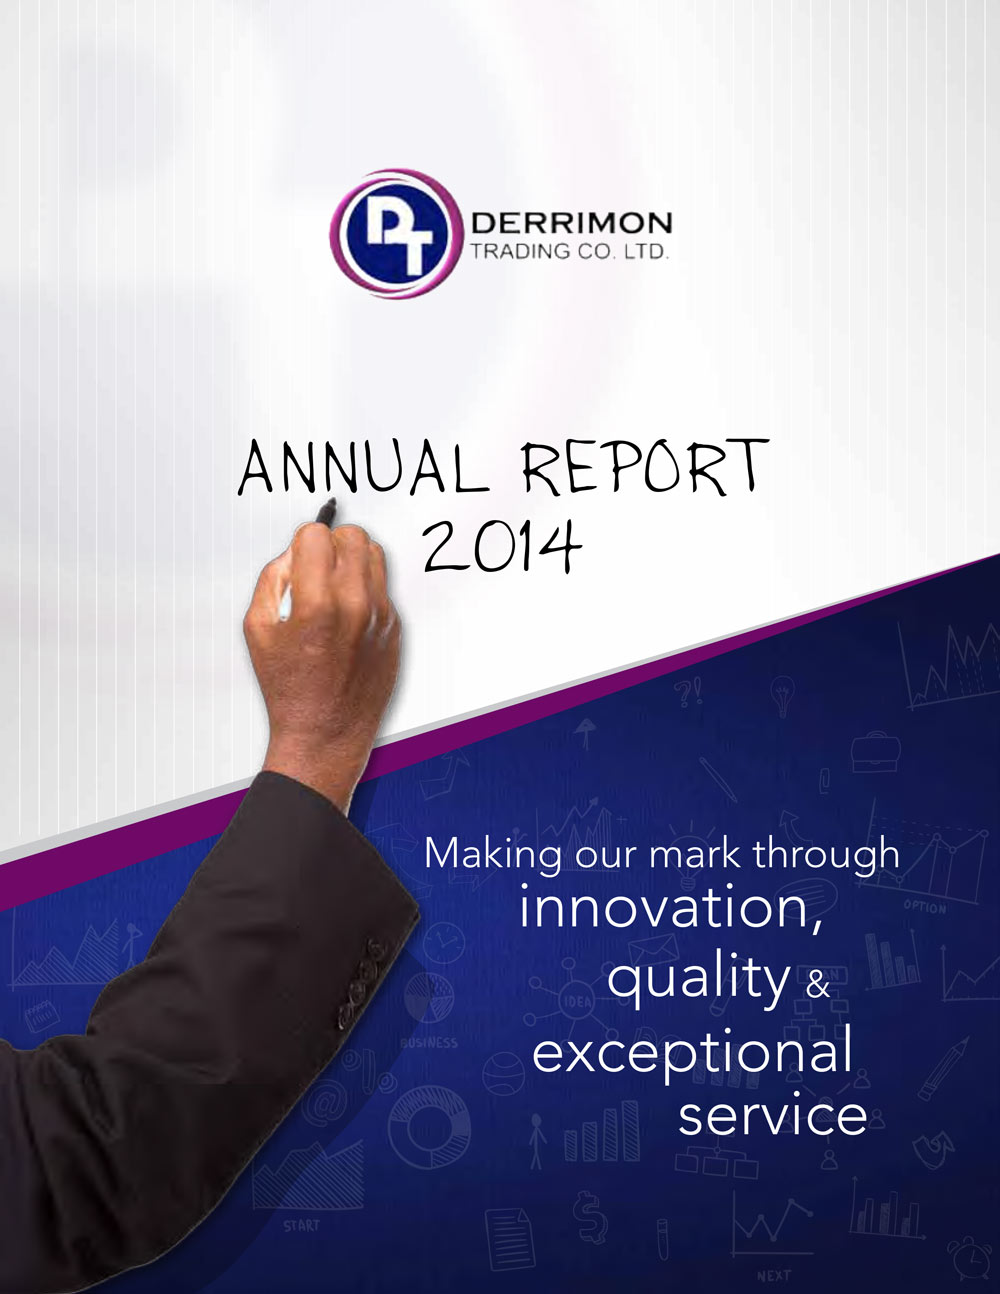 derrimon-trading-annual-report-2014-doc-22547-1